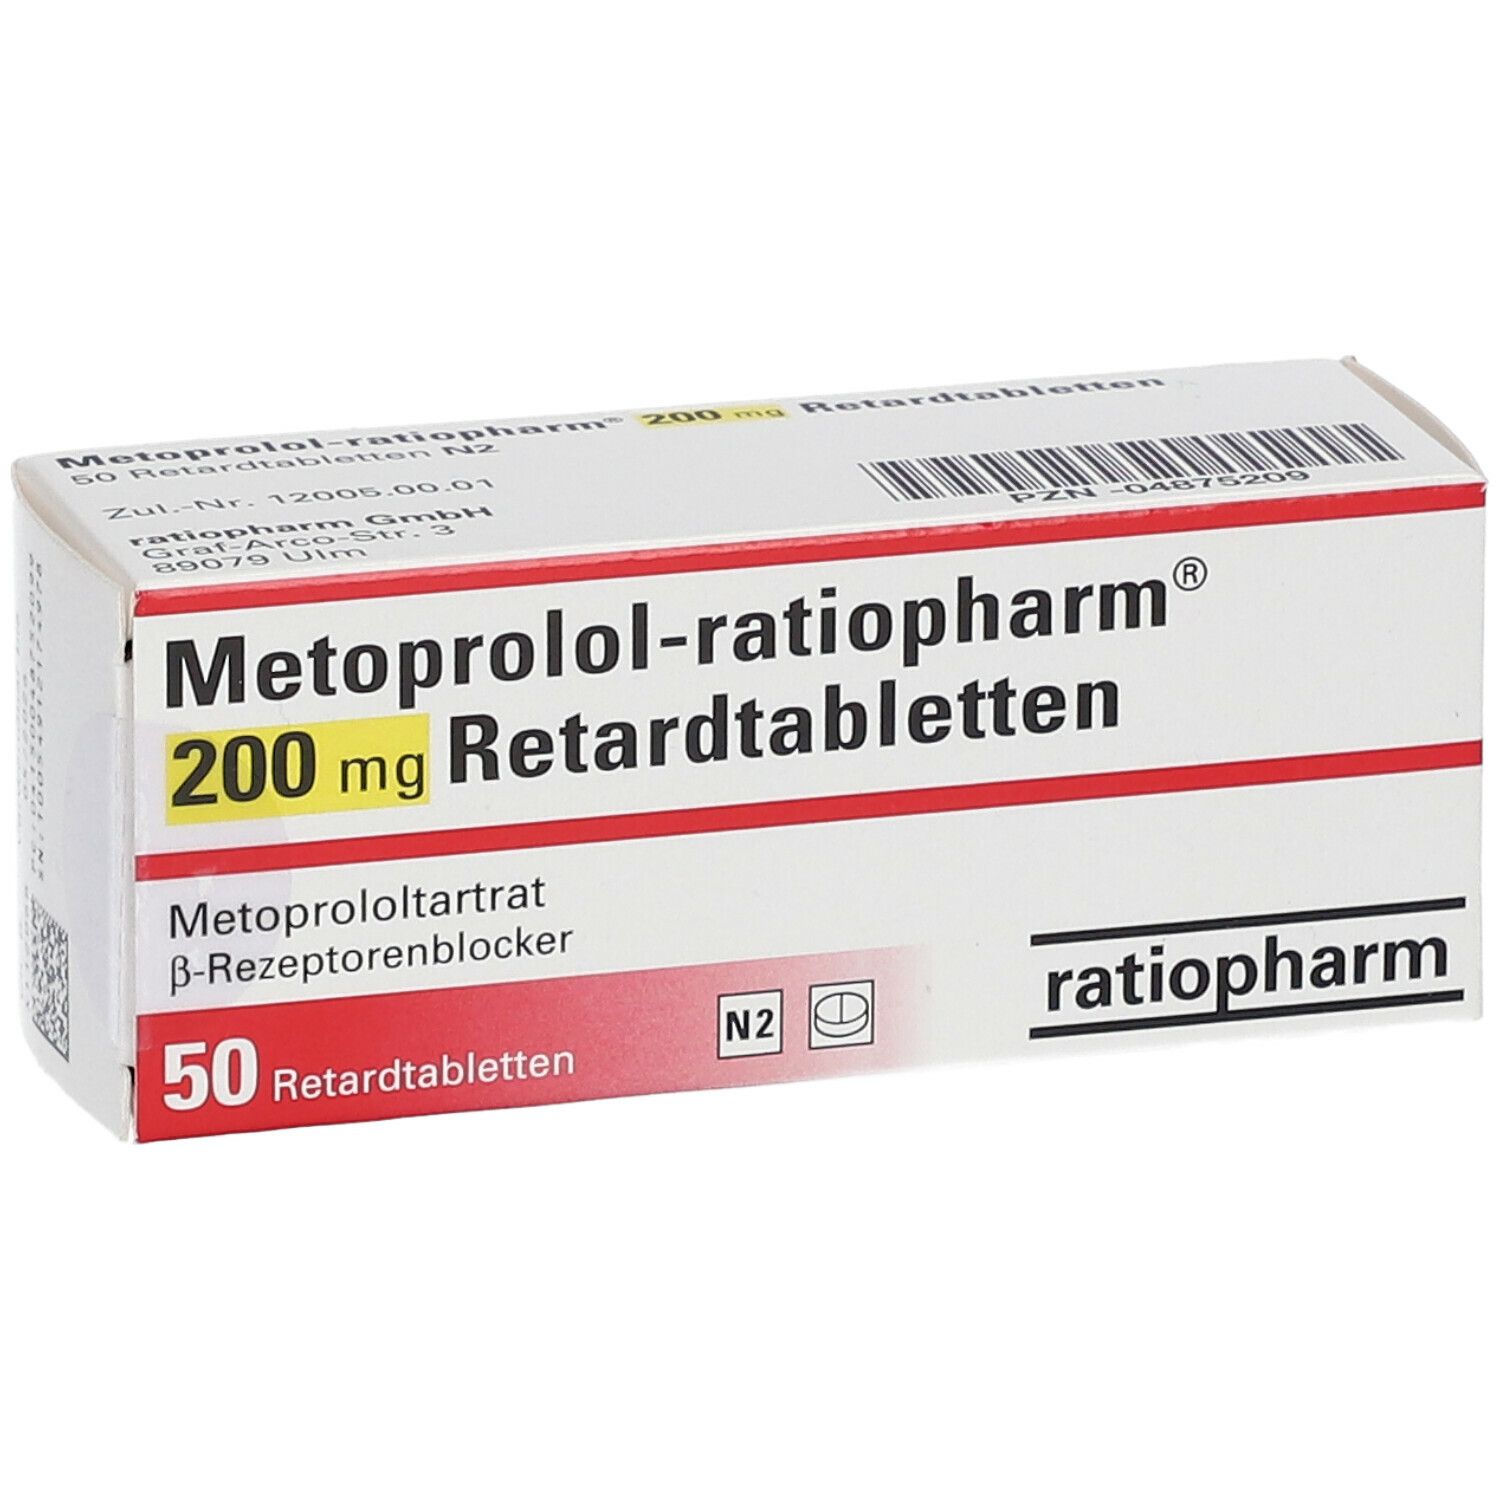 Metoprolol-ratiopharm® 200 mg